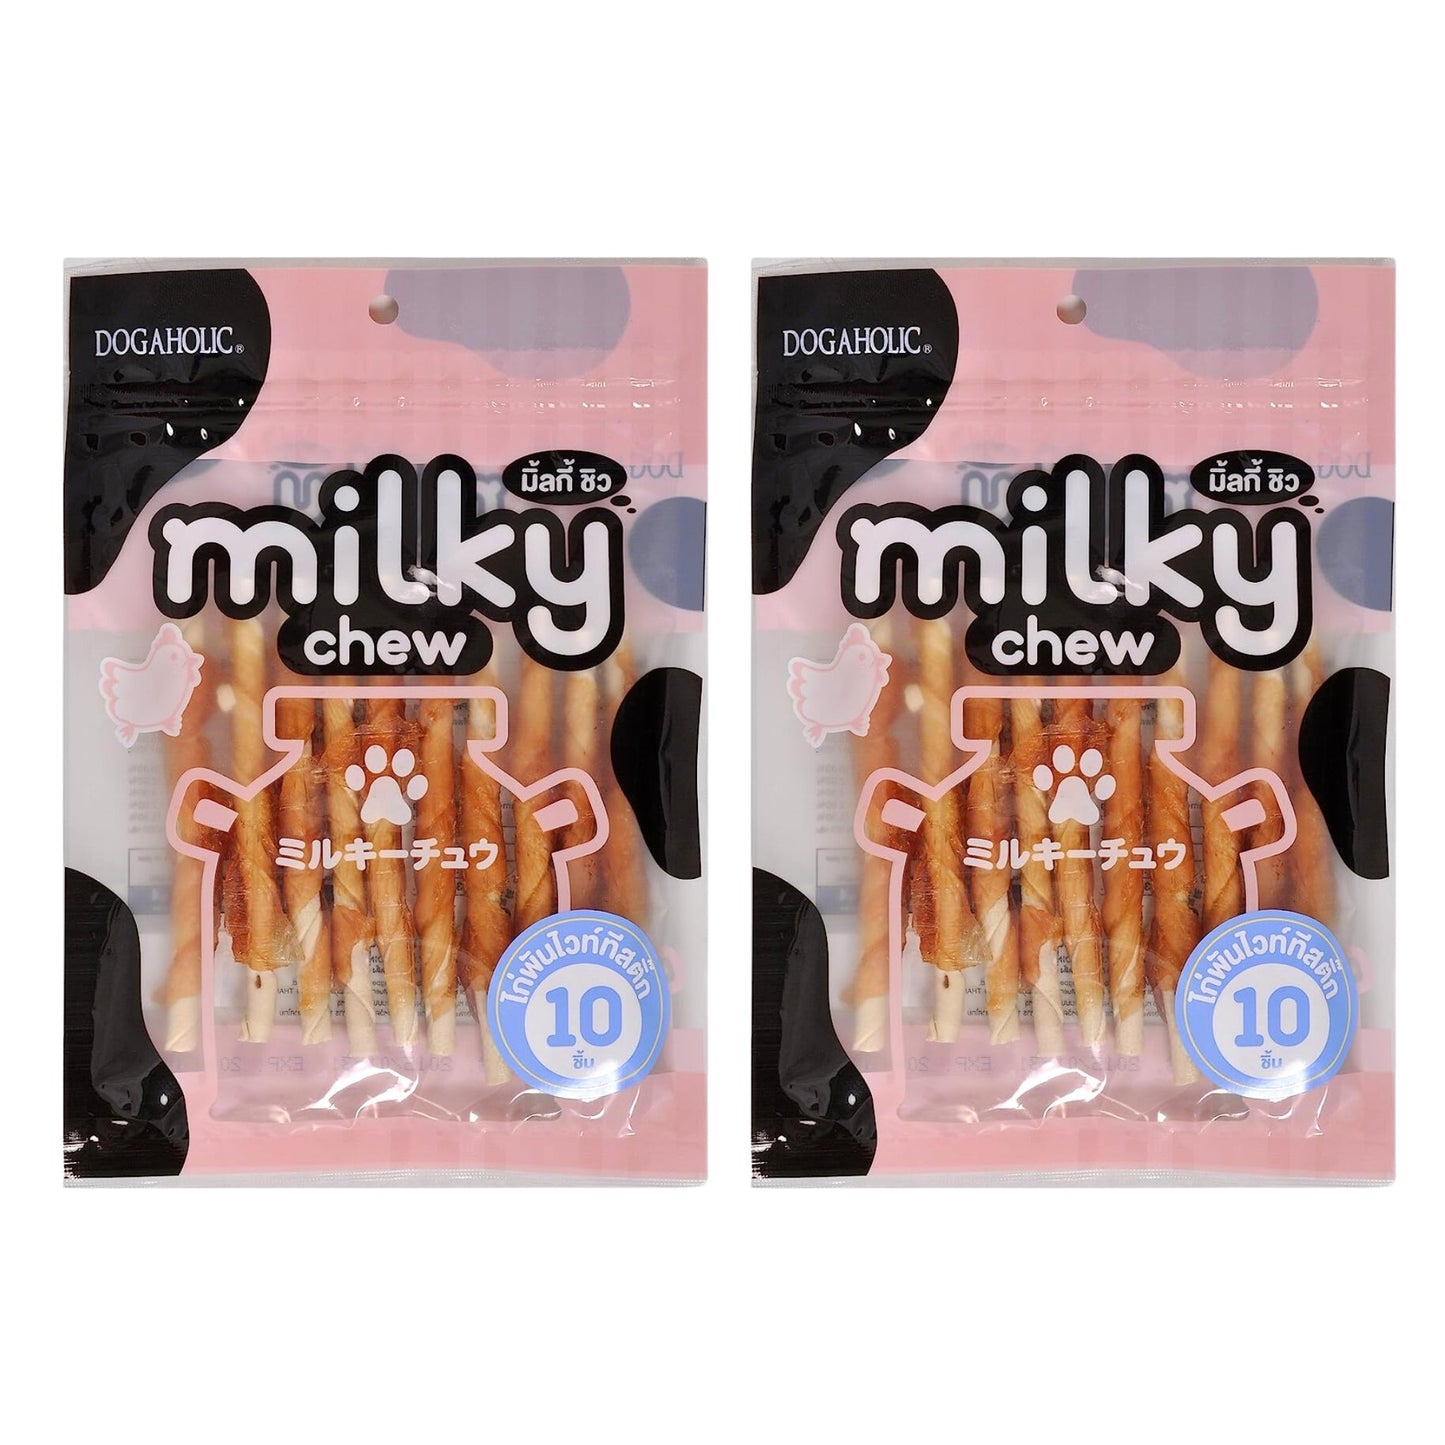 Dogaholic Milky Chew Chicken Stick 10-in-1 Dog Treat, Pack of 2